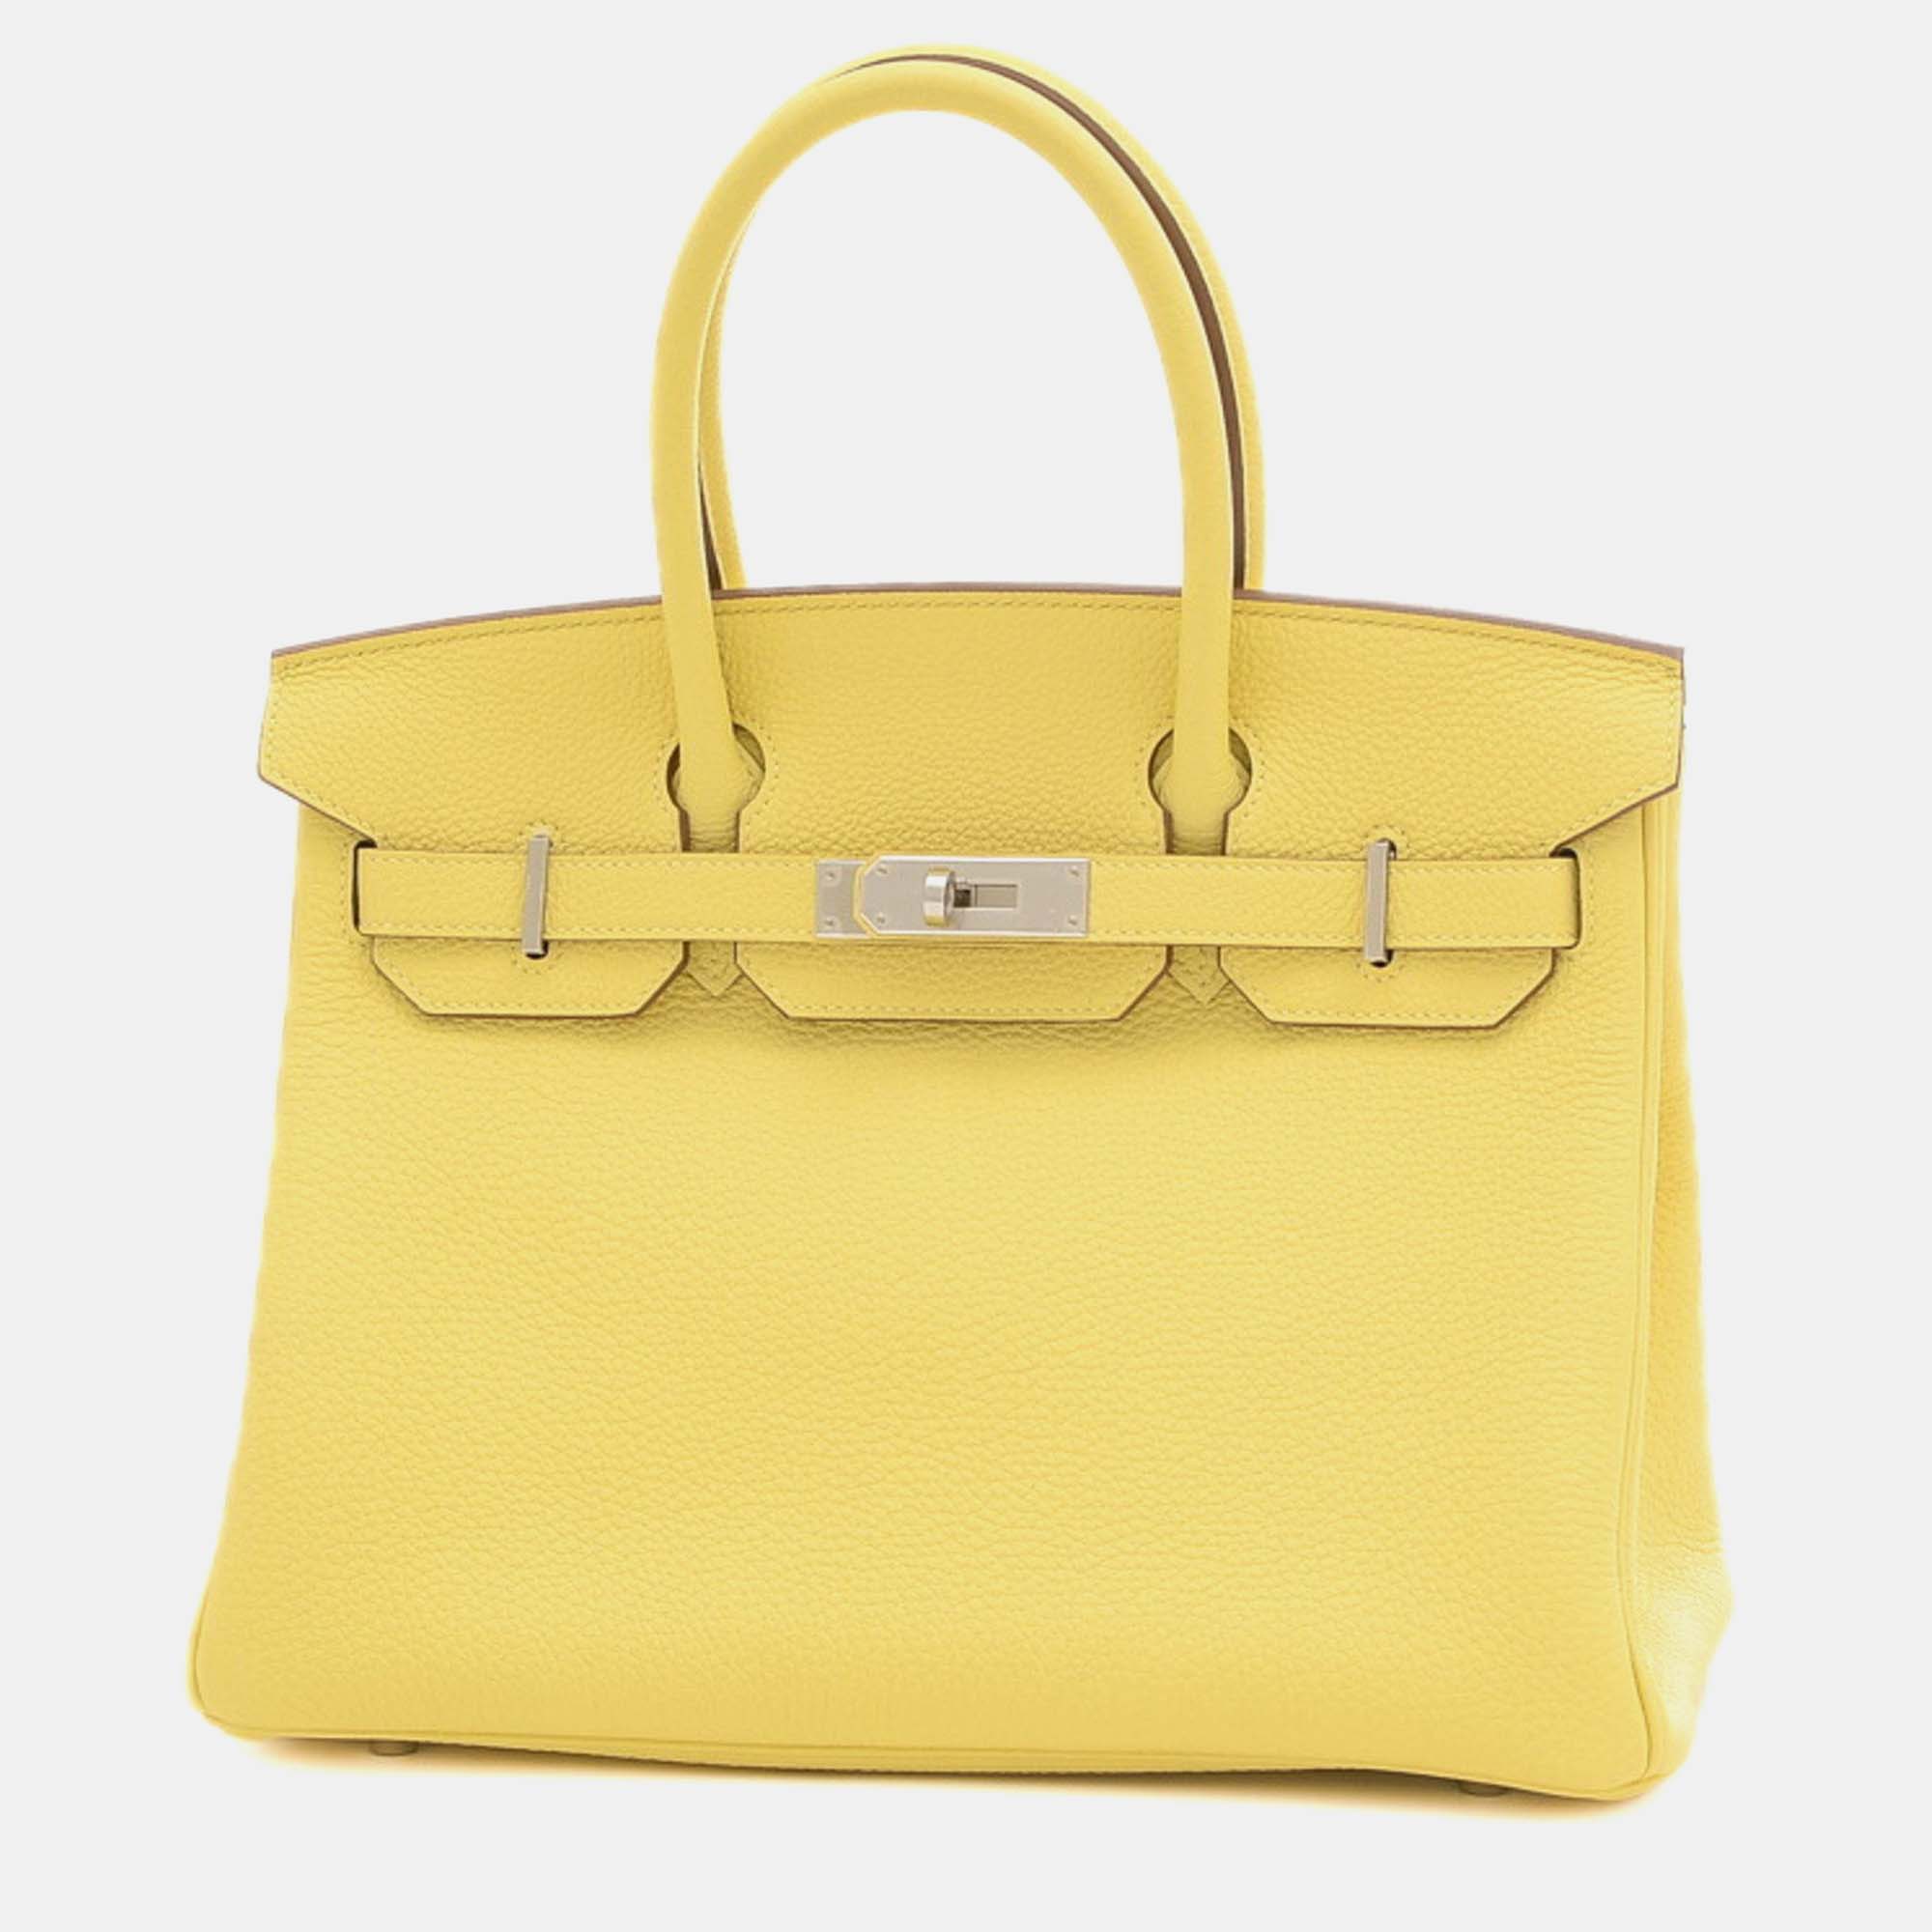 Hermes jaune poussin togo birkin handbag